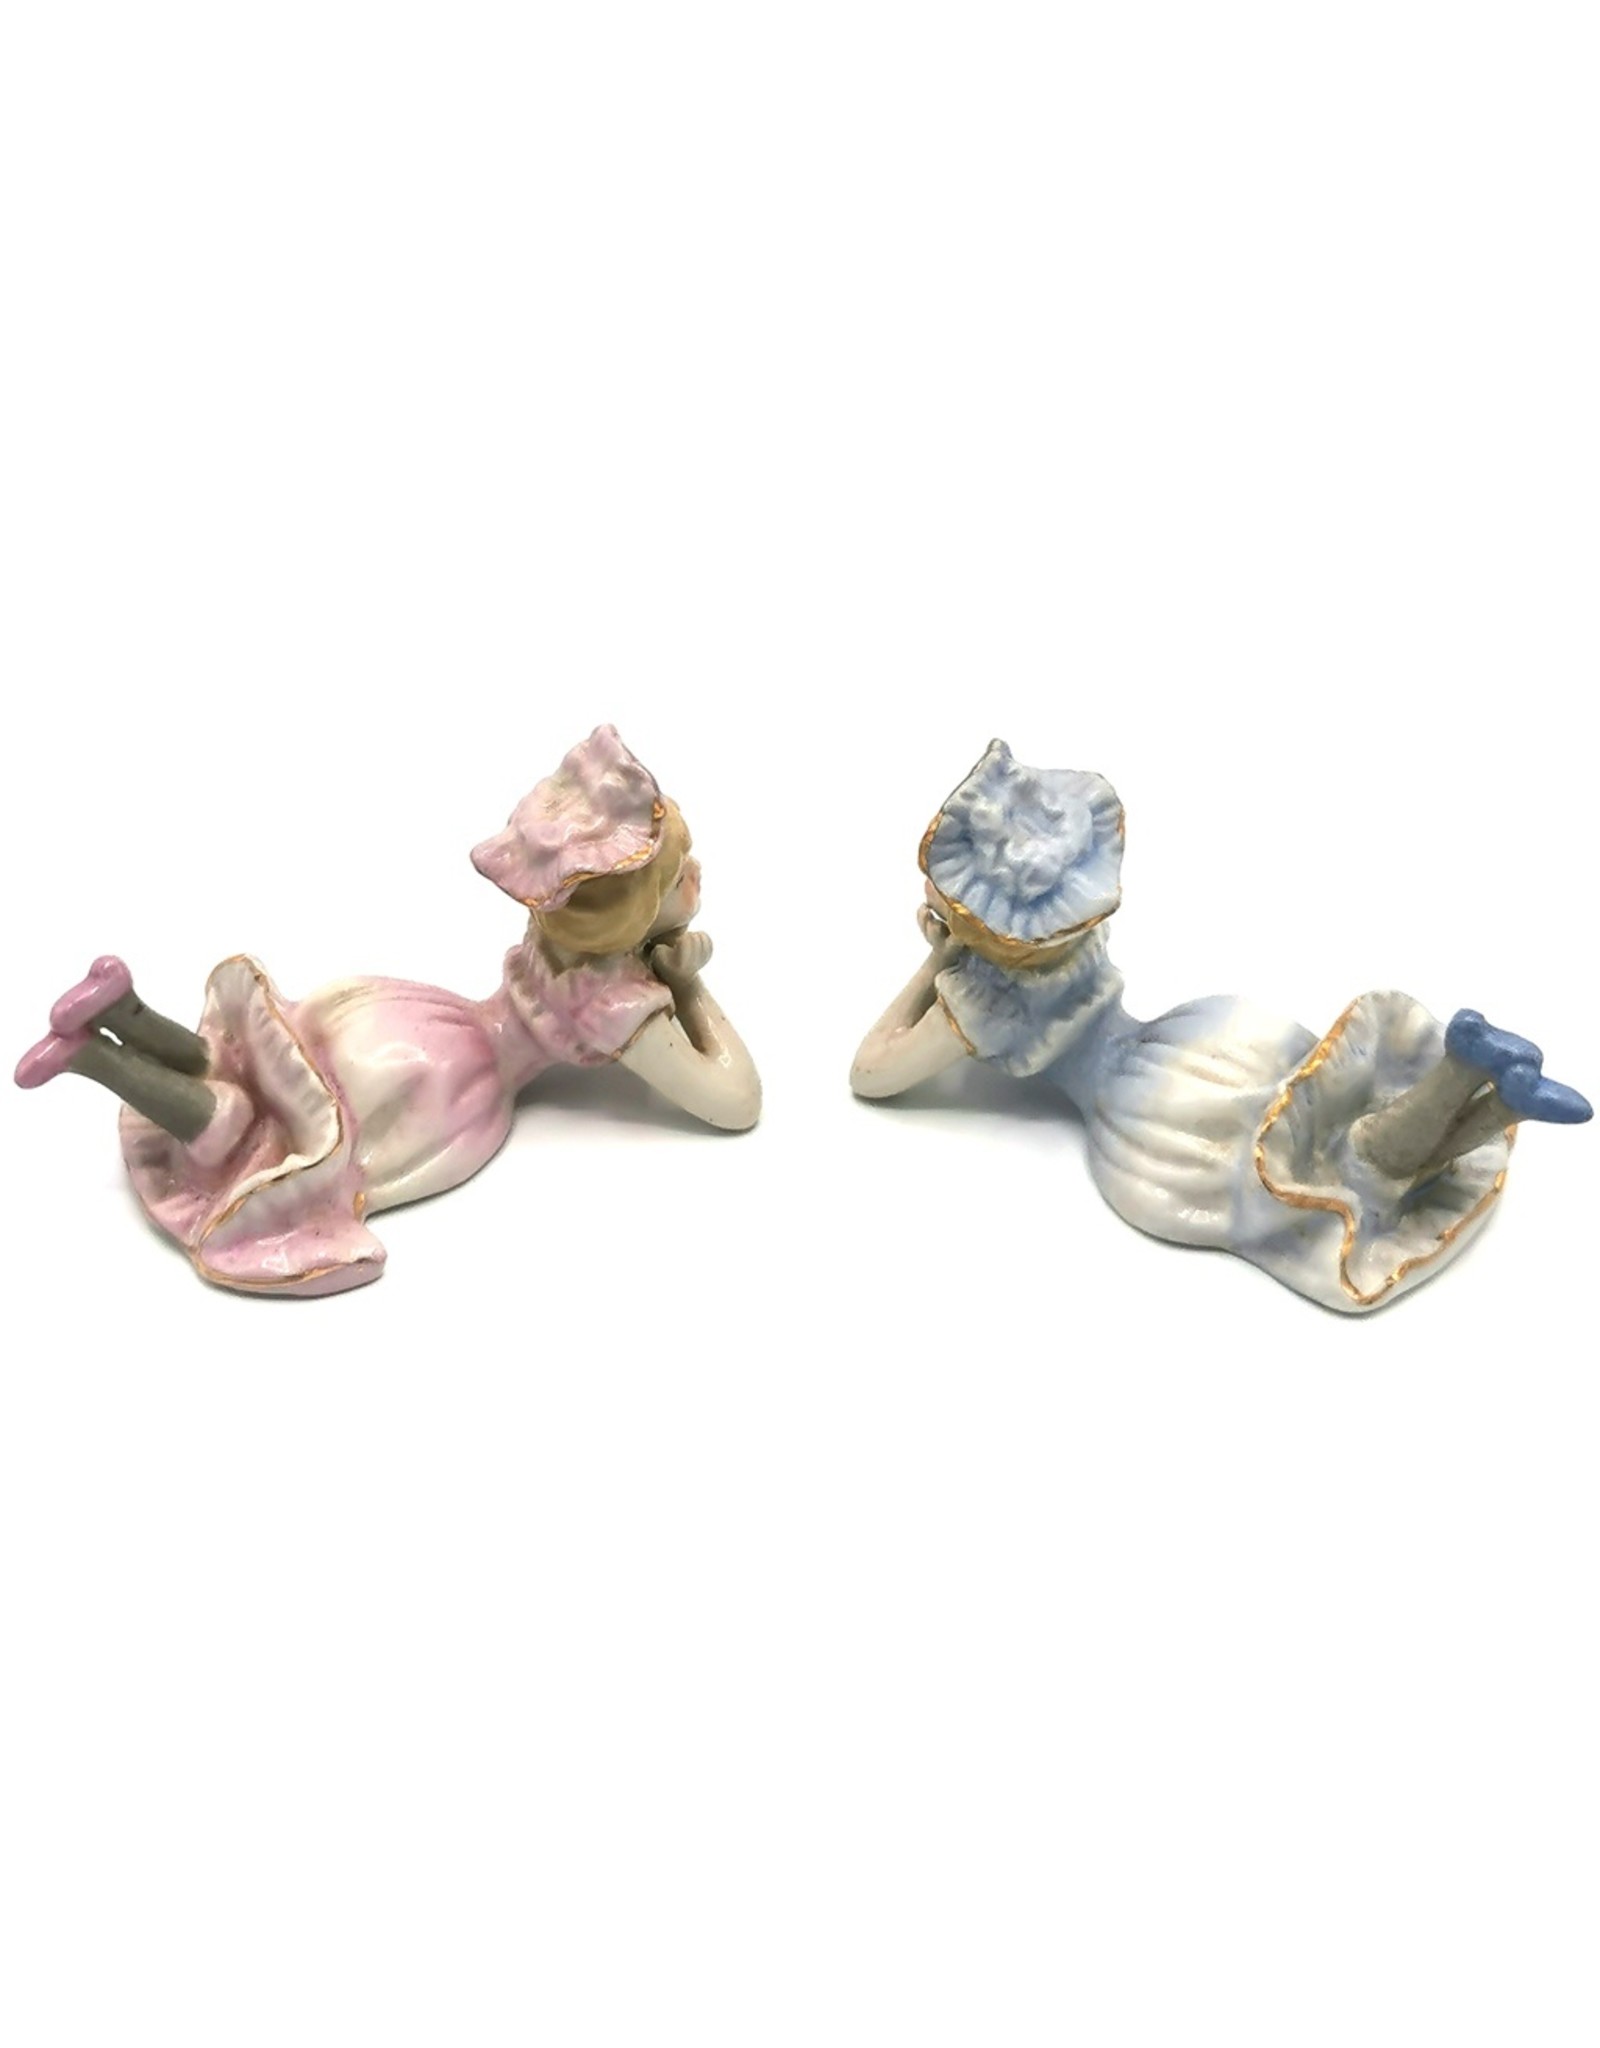 Trukado Miscellaneous - A Pair of Porcelain Girls Rococo Style